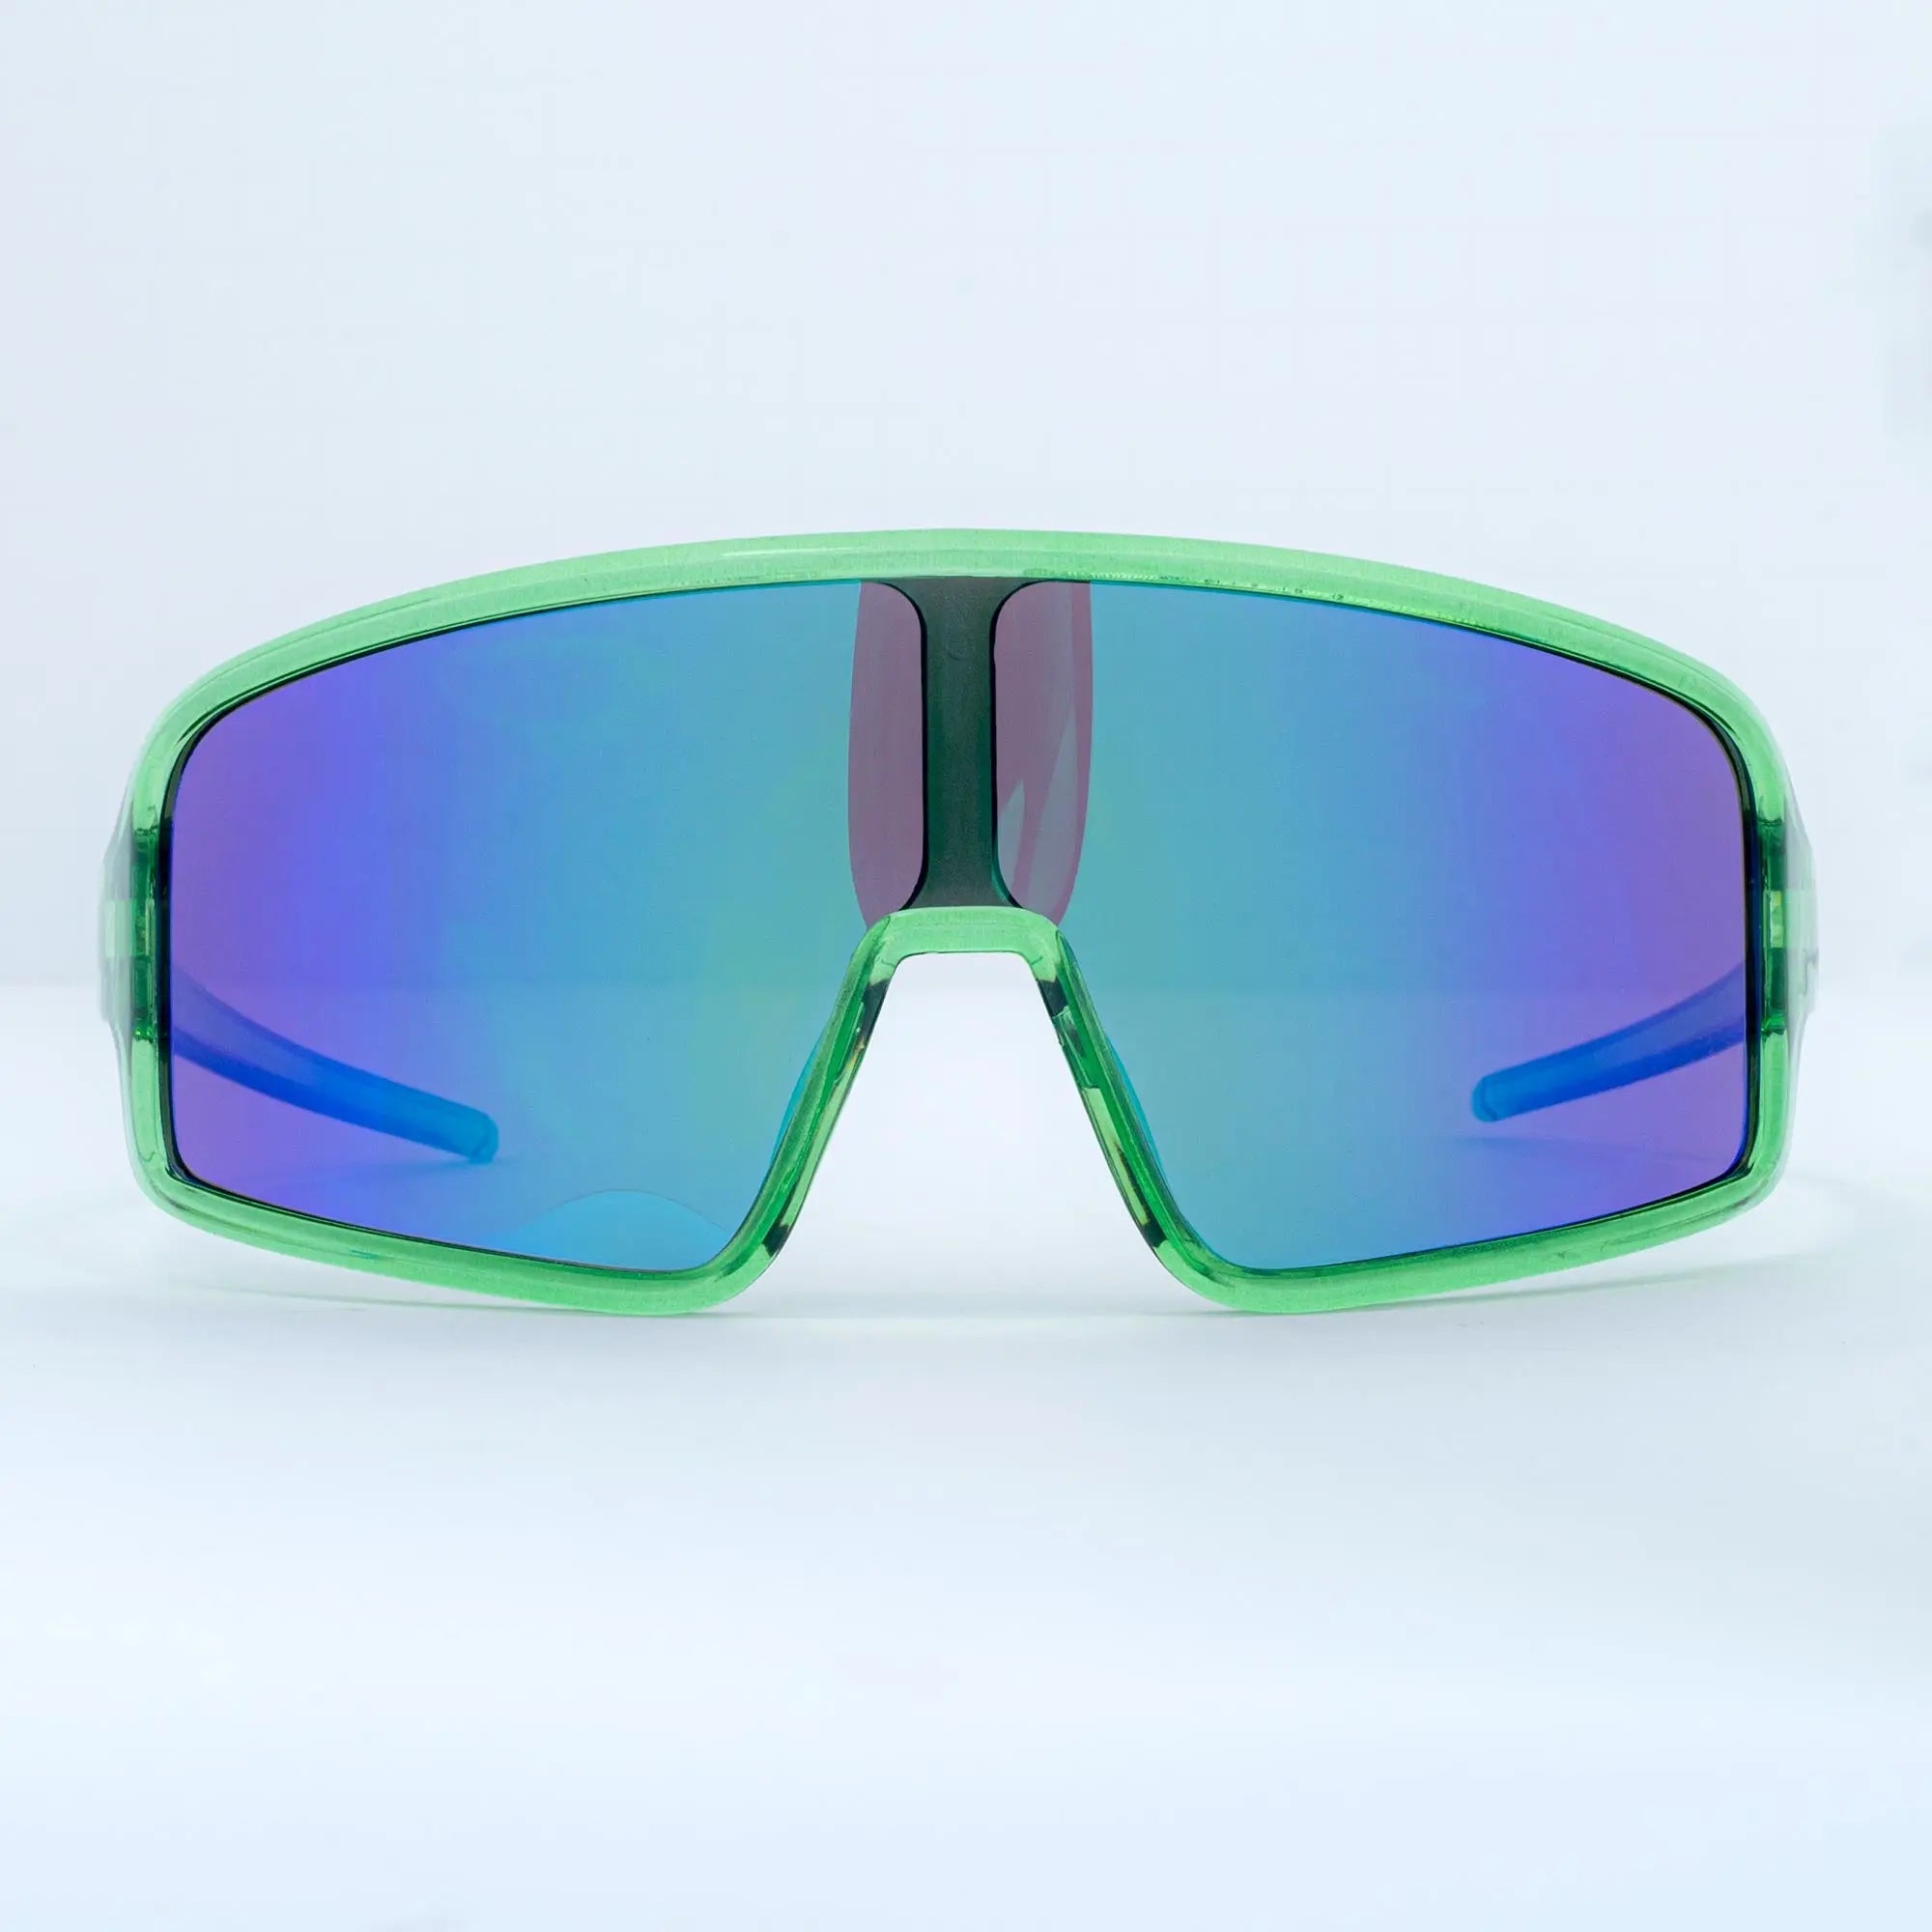 SWELL Wakesurf - Full-On Polarized Sunglasses 2021 SWELL Wakesurf